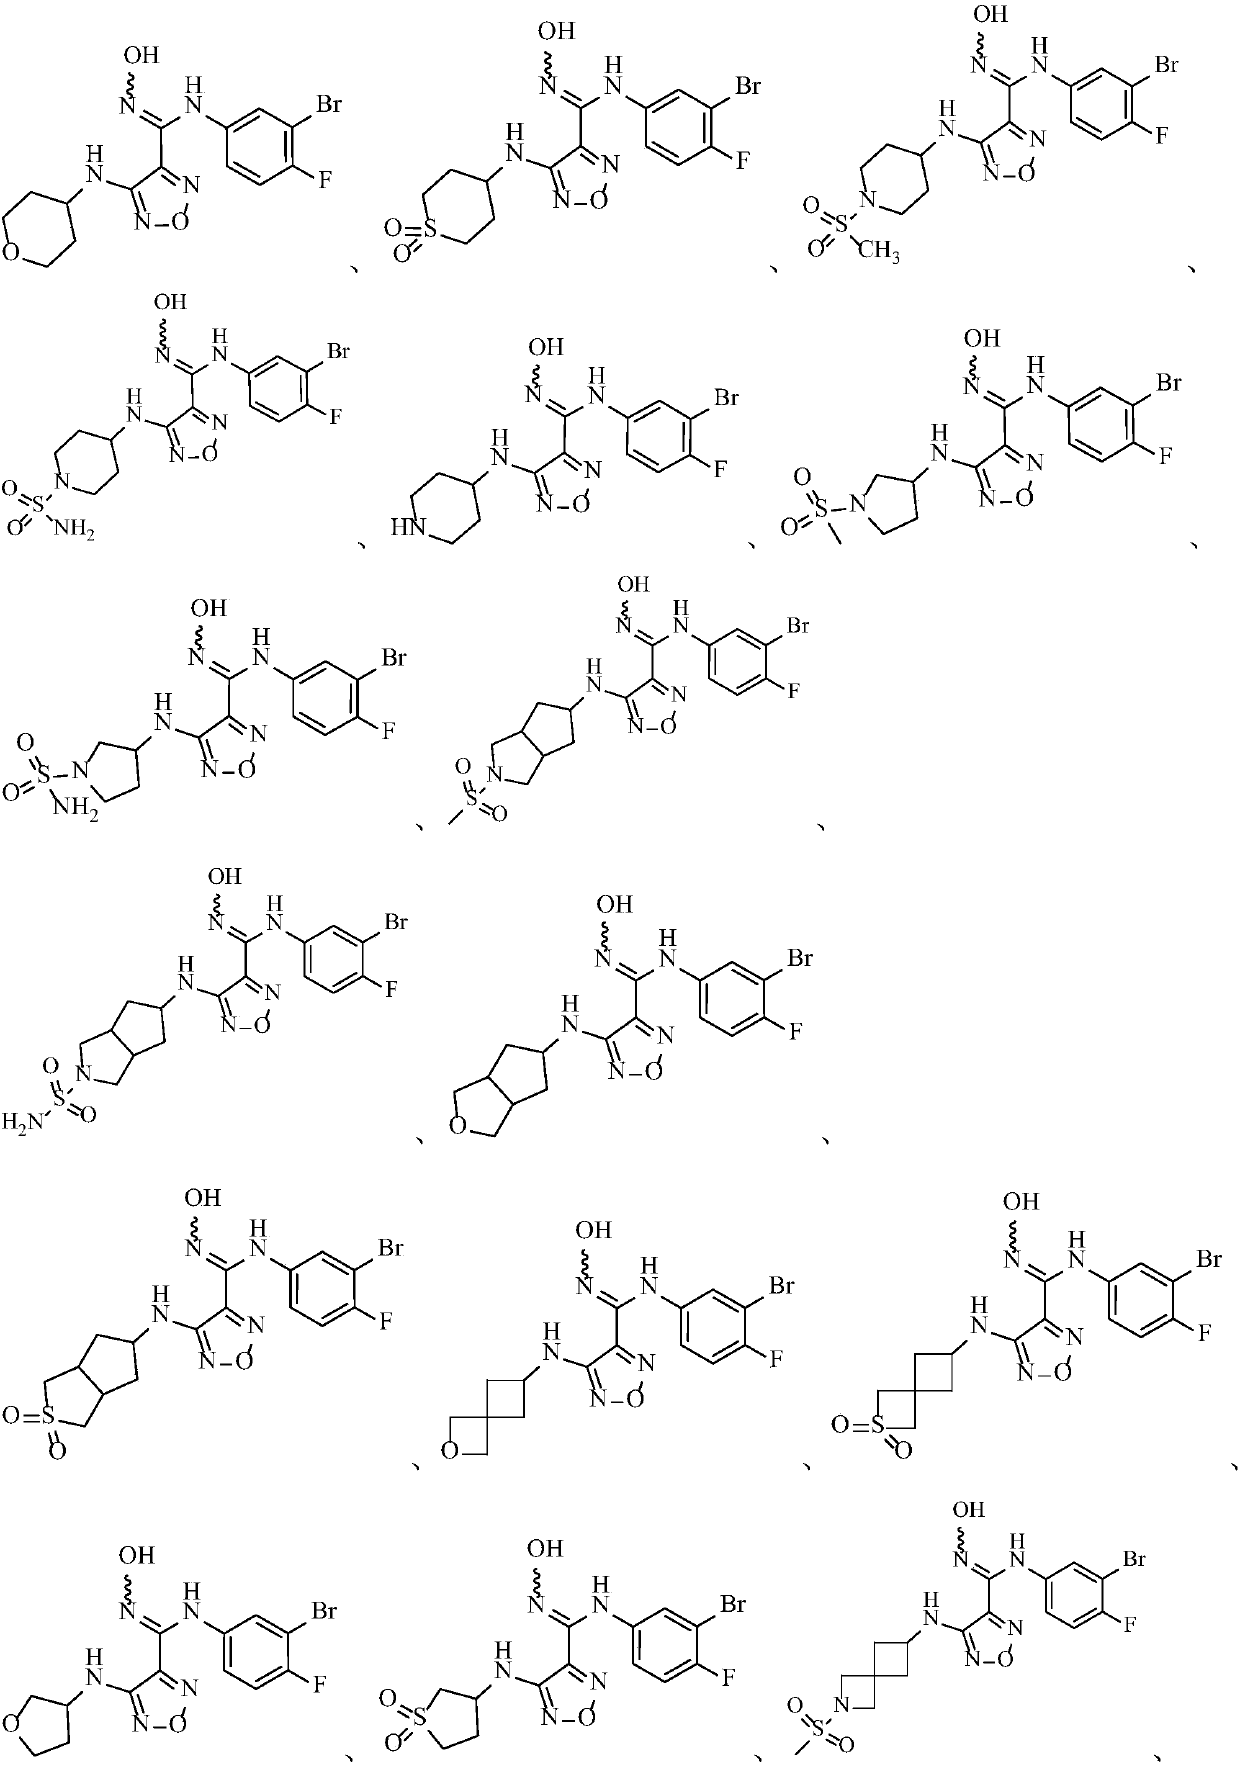 Indoleamine 2,3-dioxygenase inhibitor and application thereof